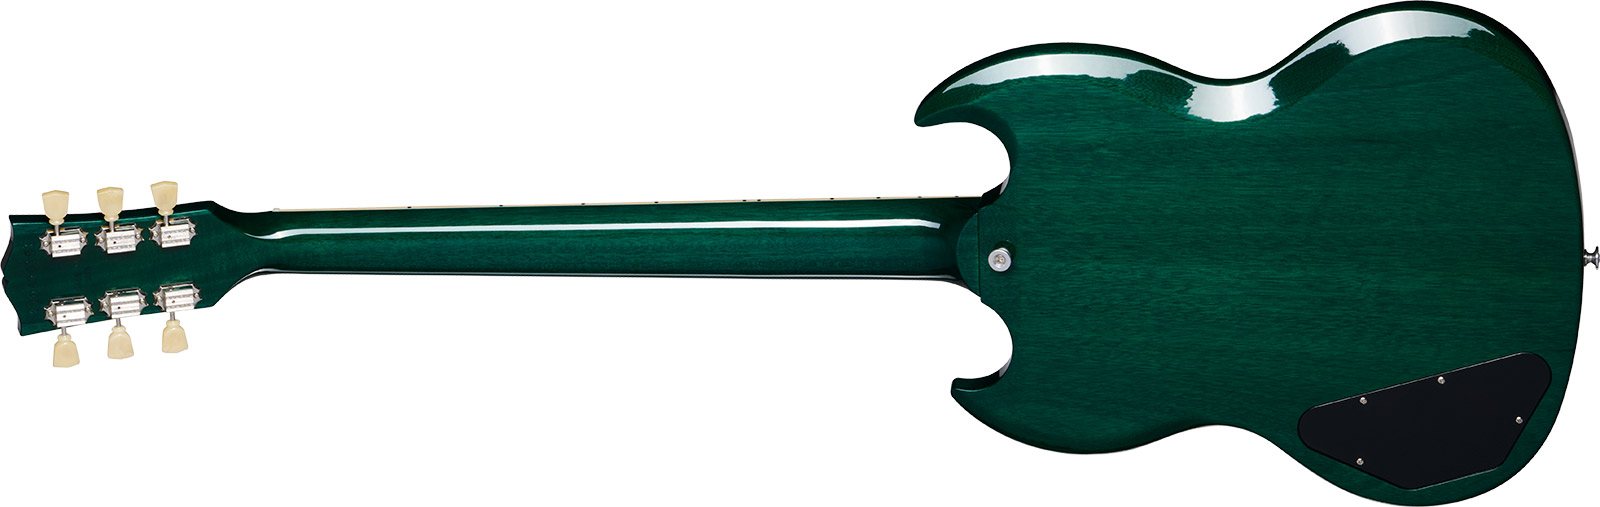 Gibson Sg Standard 1961 Custom Color 2h Ht Rw - Translucent Teal - Guitarra eléctrica de doble corte. - Variation 1